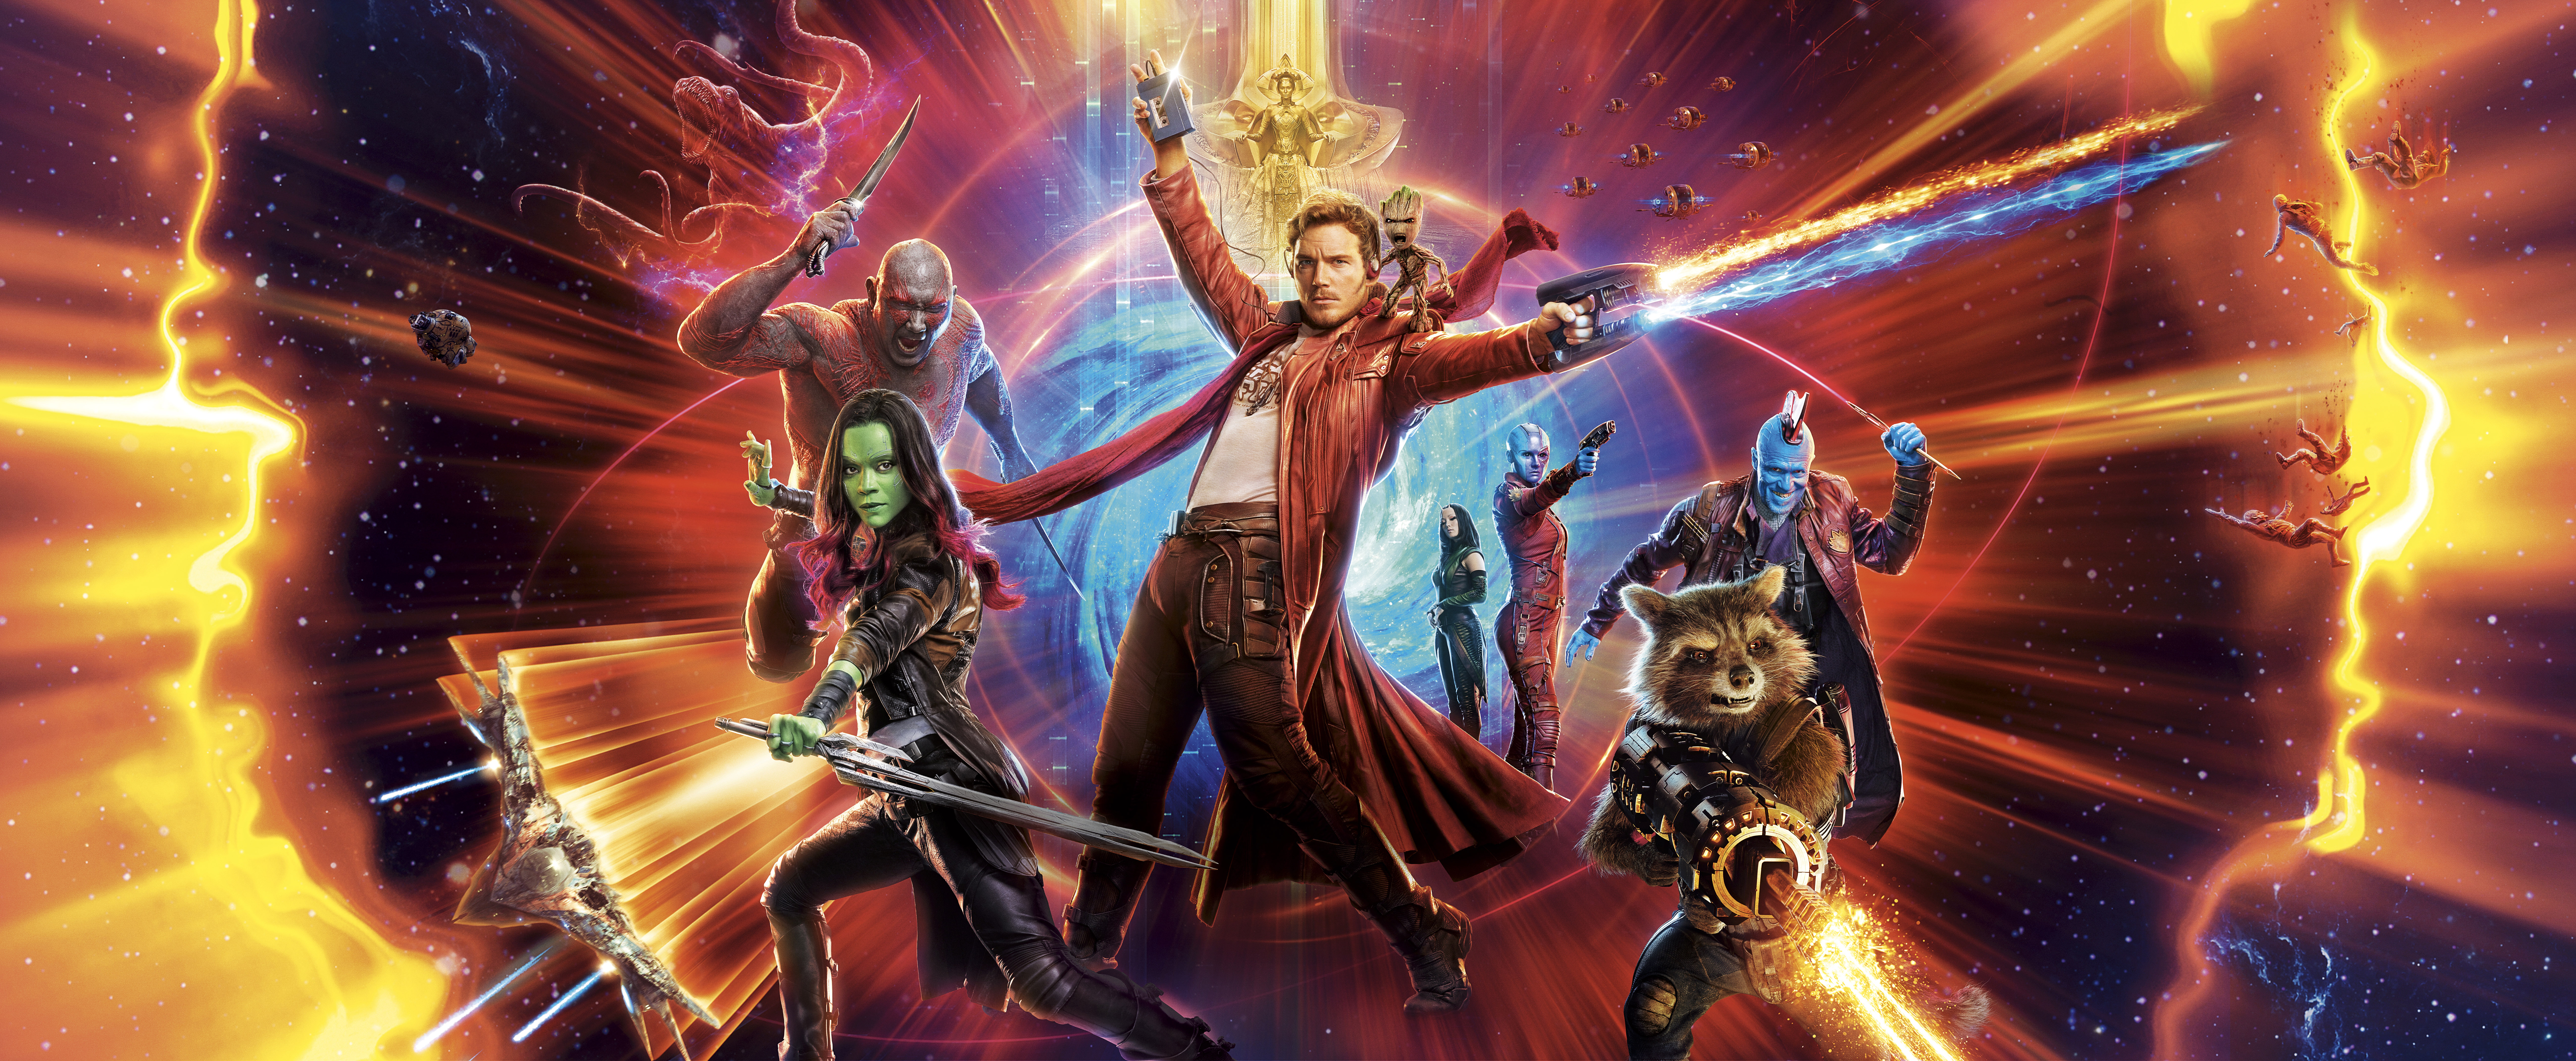 Movie Guardians of the Galaxy Vol. 2 4k Ultra HD Wallpaper